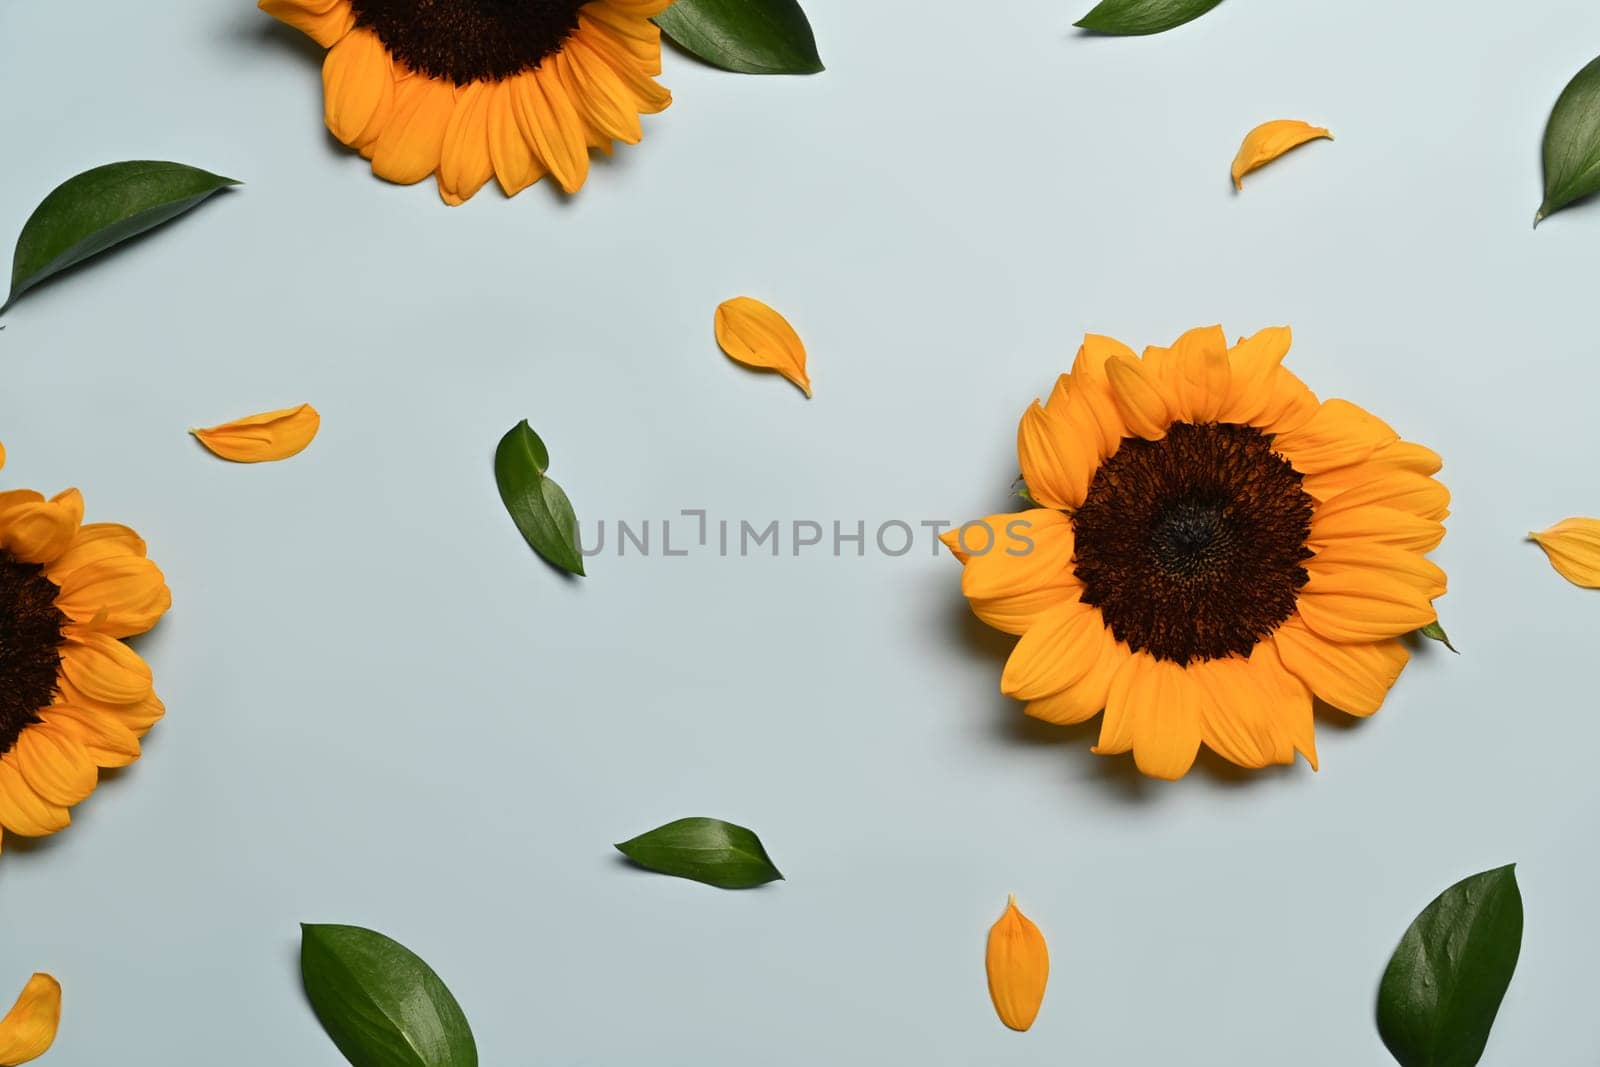 Beautiful sunflowers on light blue background. Floral background, autumn or summer concept by prathanchorruangsak